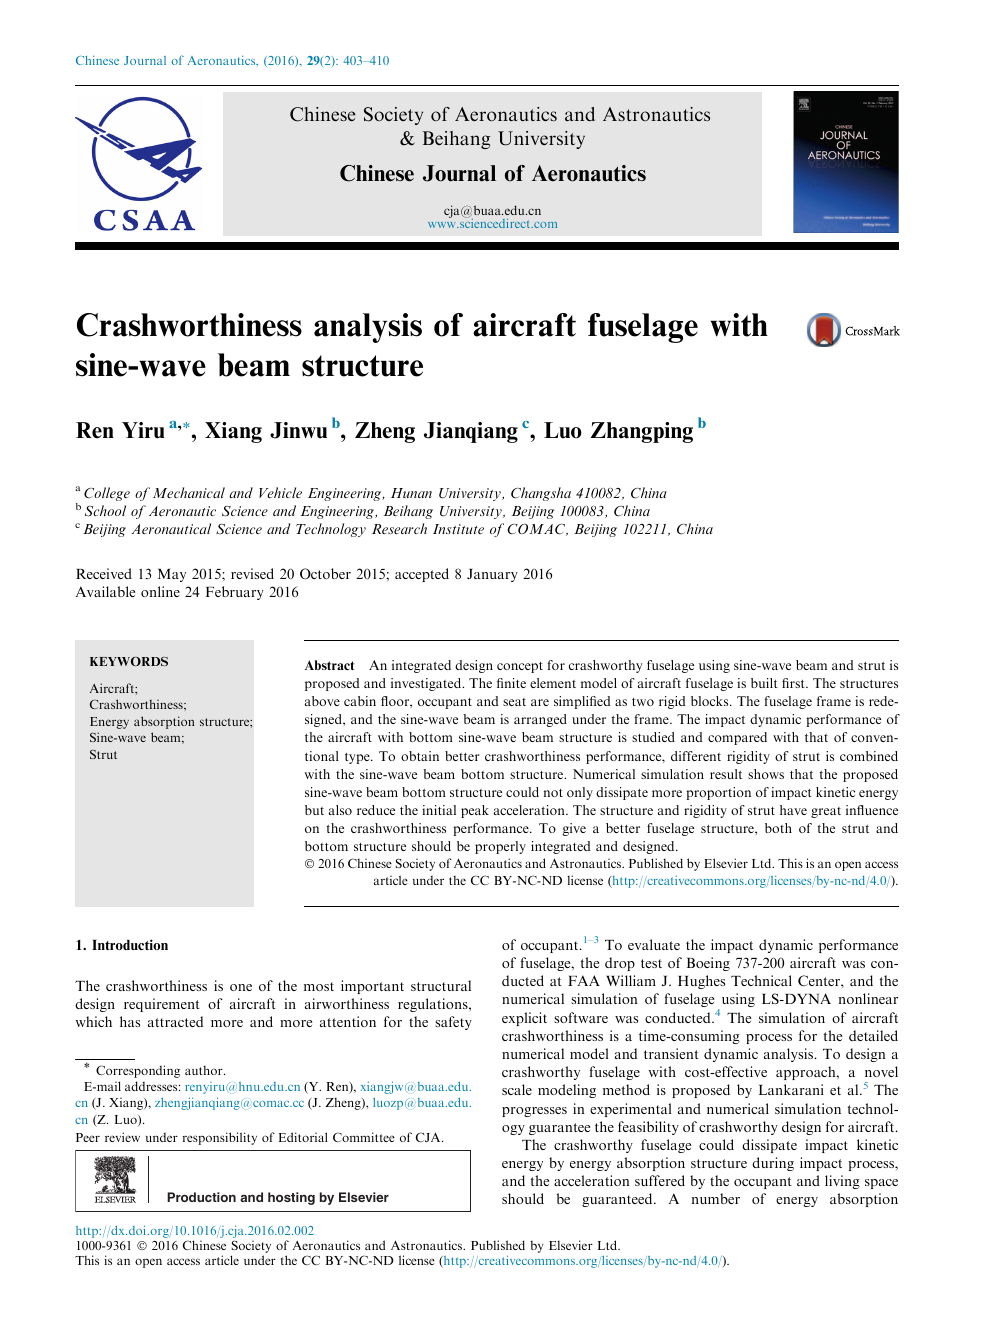 Crashworthiness analysis of aircraft fuselage with sine-wave beam